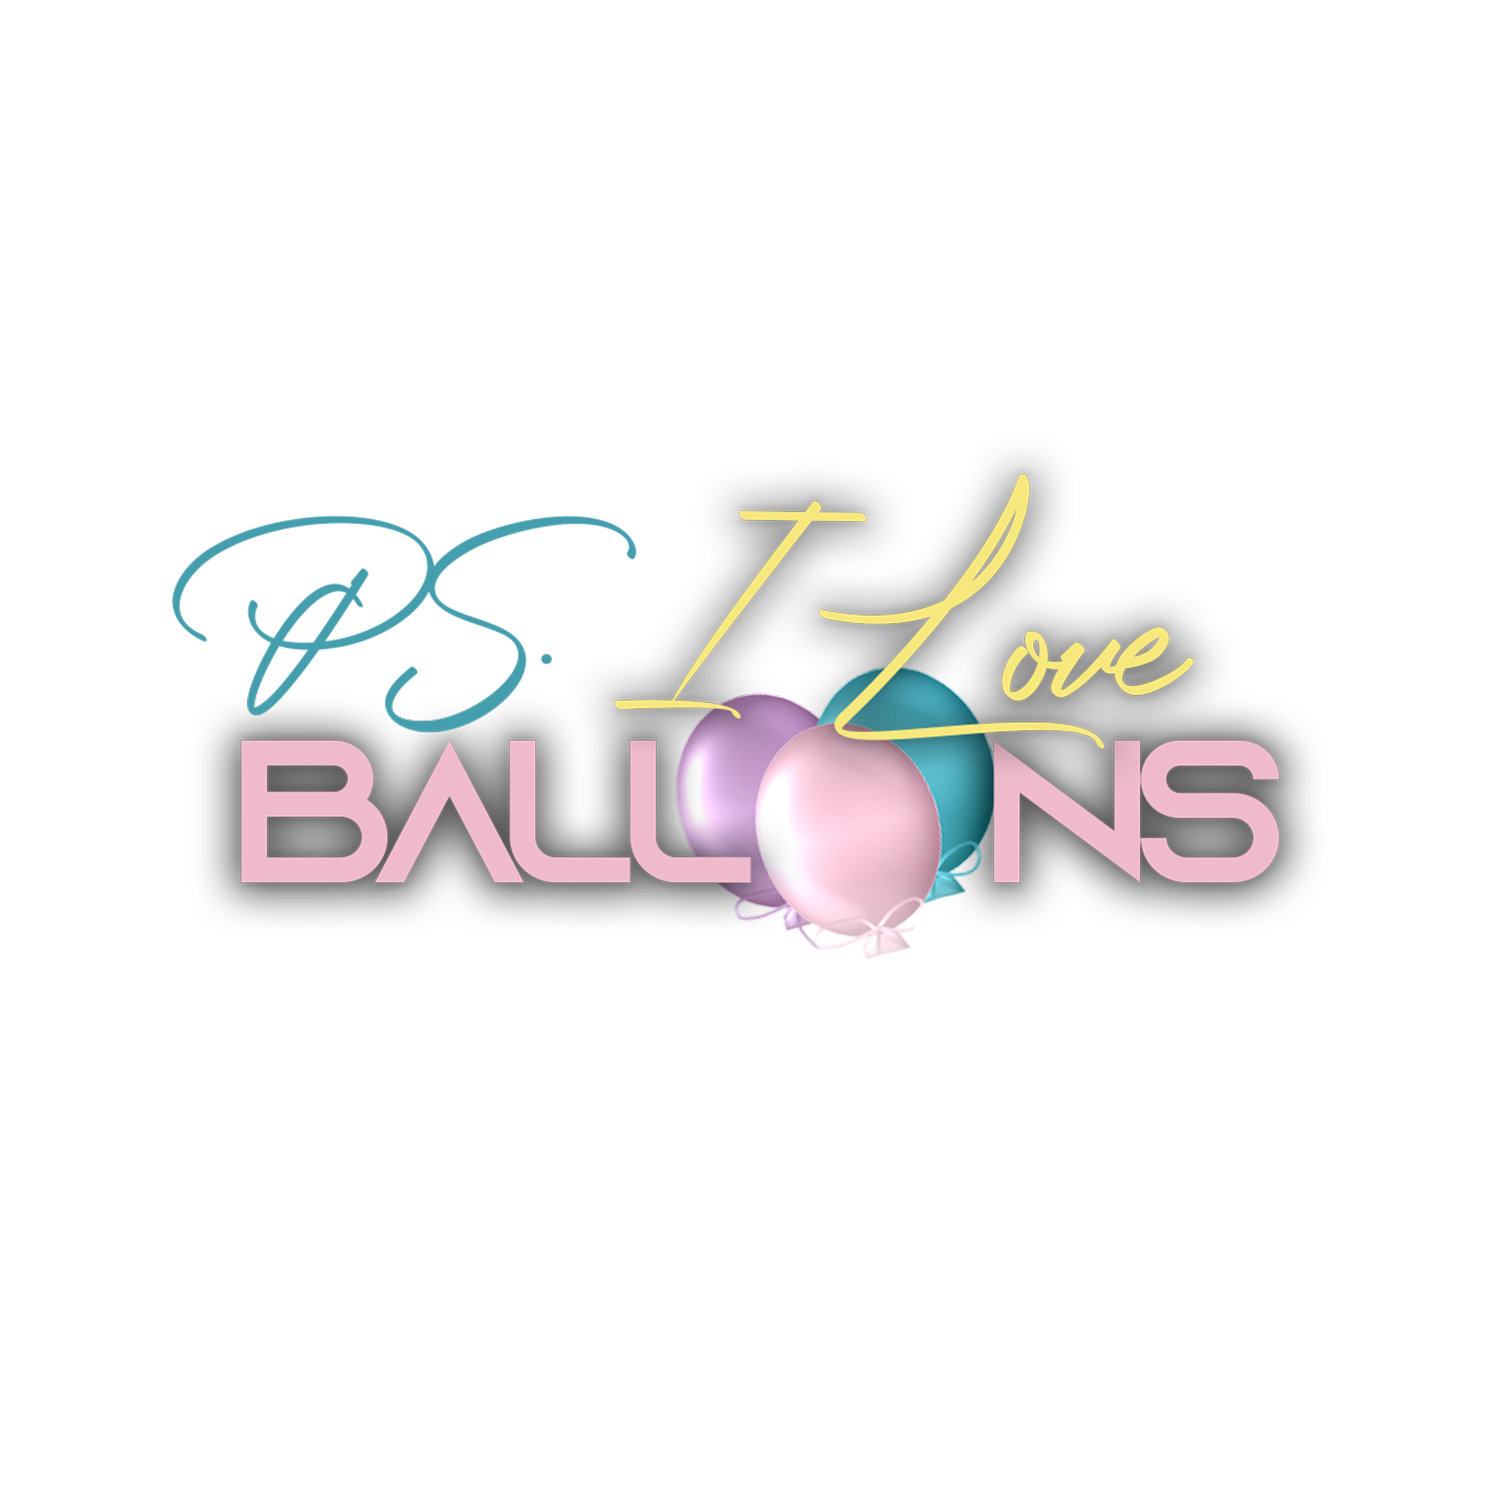 P.S. I LOVE BALLOONS